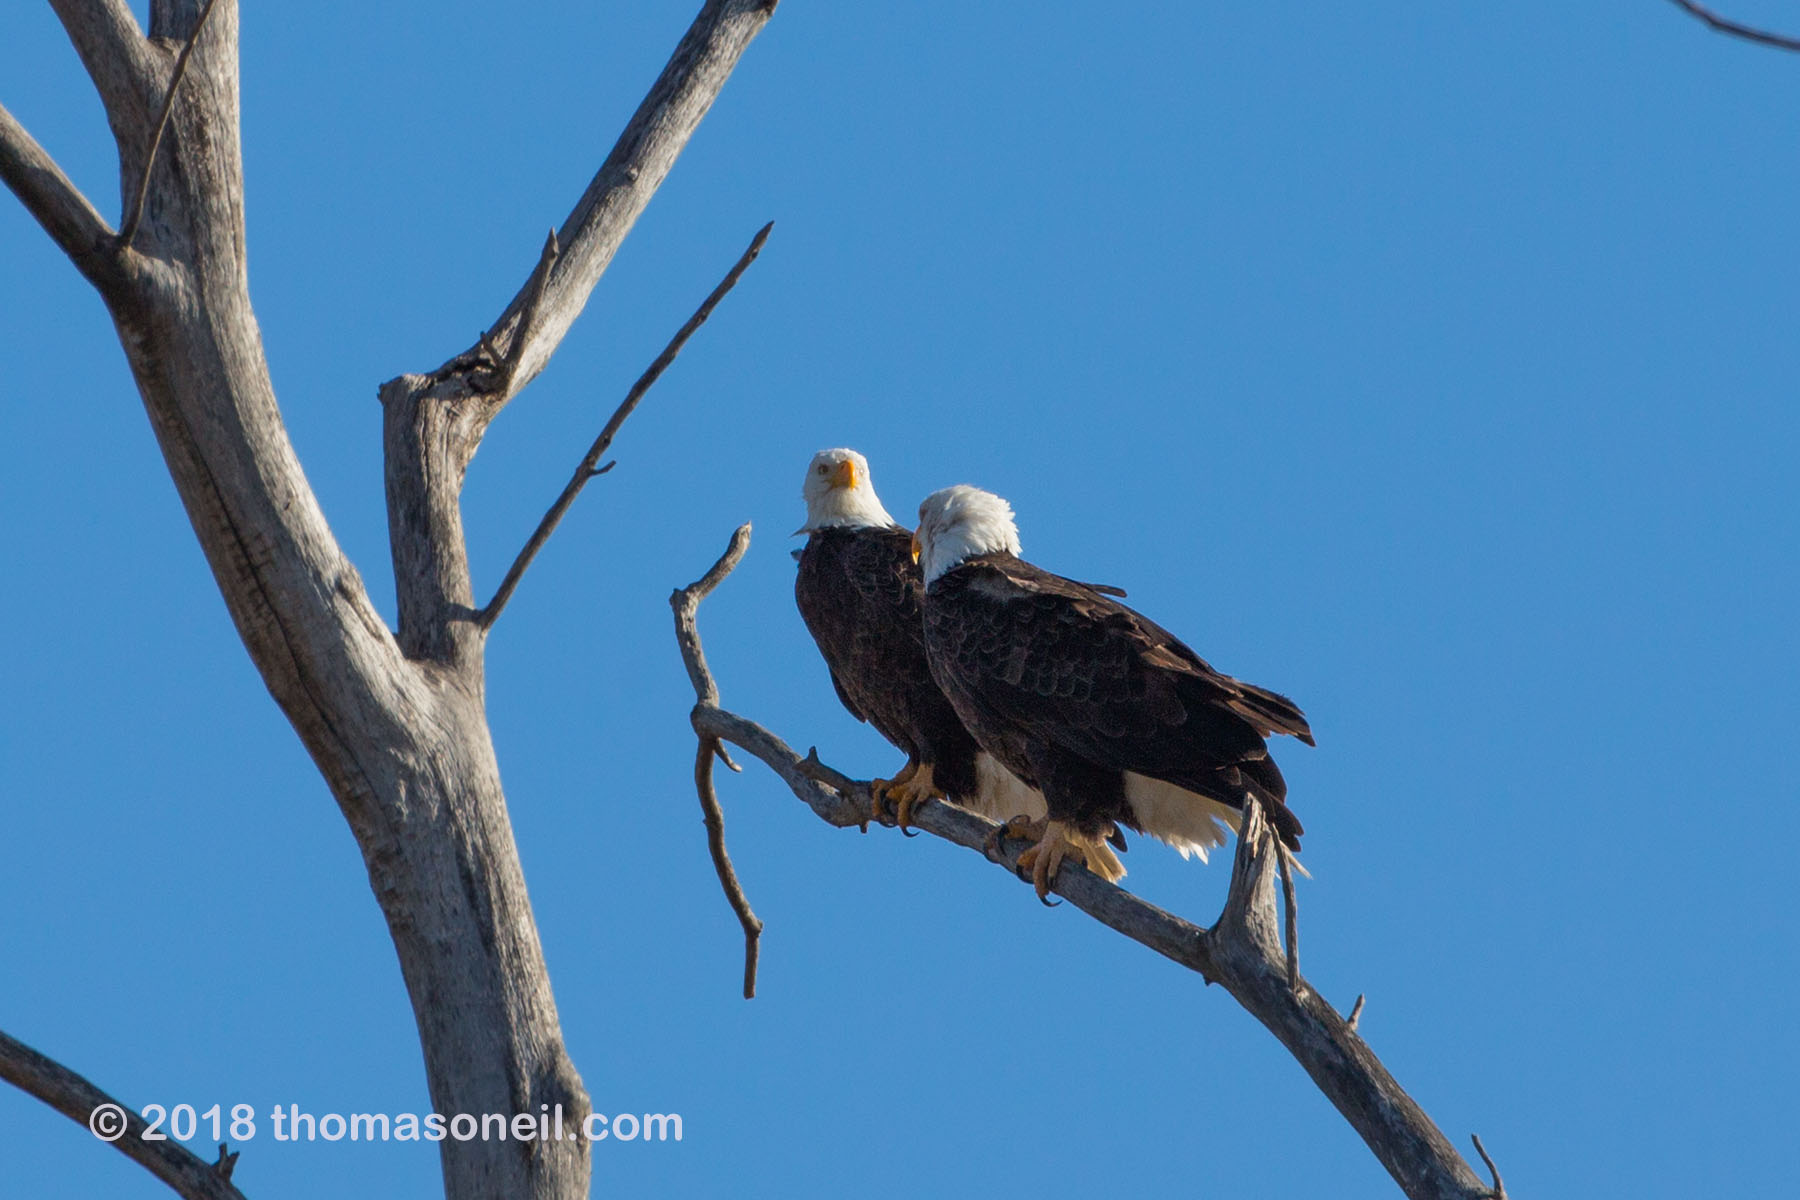 Bald eagles taking a break from nest building, Loess Bluffs National Wildlife Refuge, Missouri, December 2018.  Click for next photo.